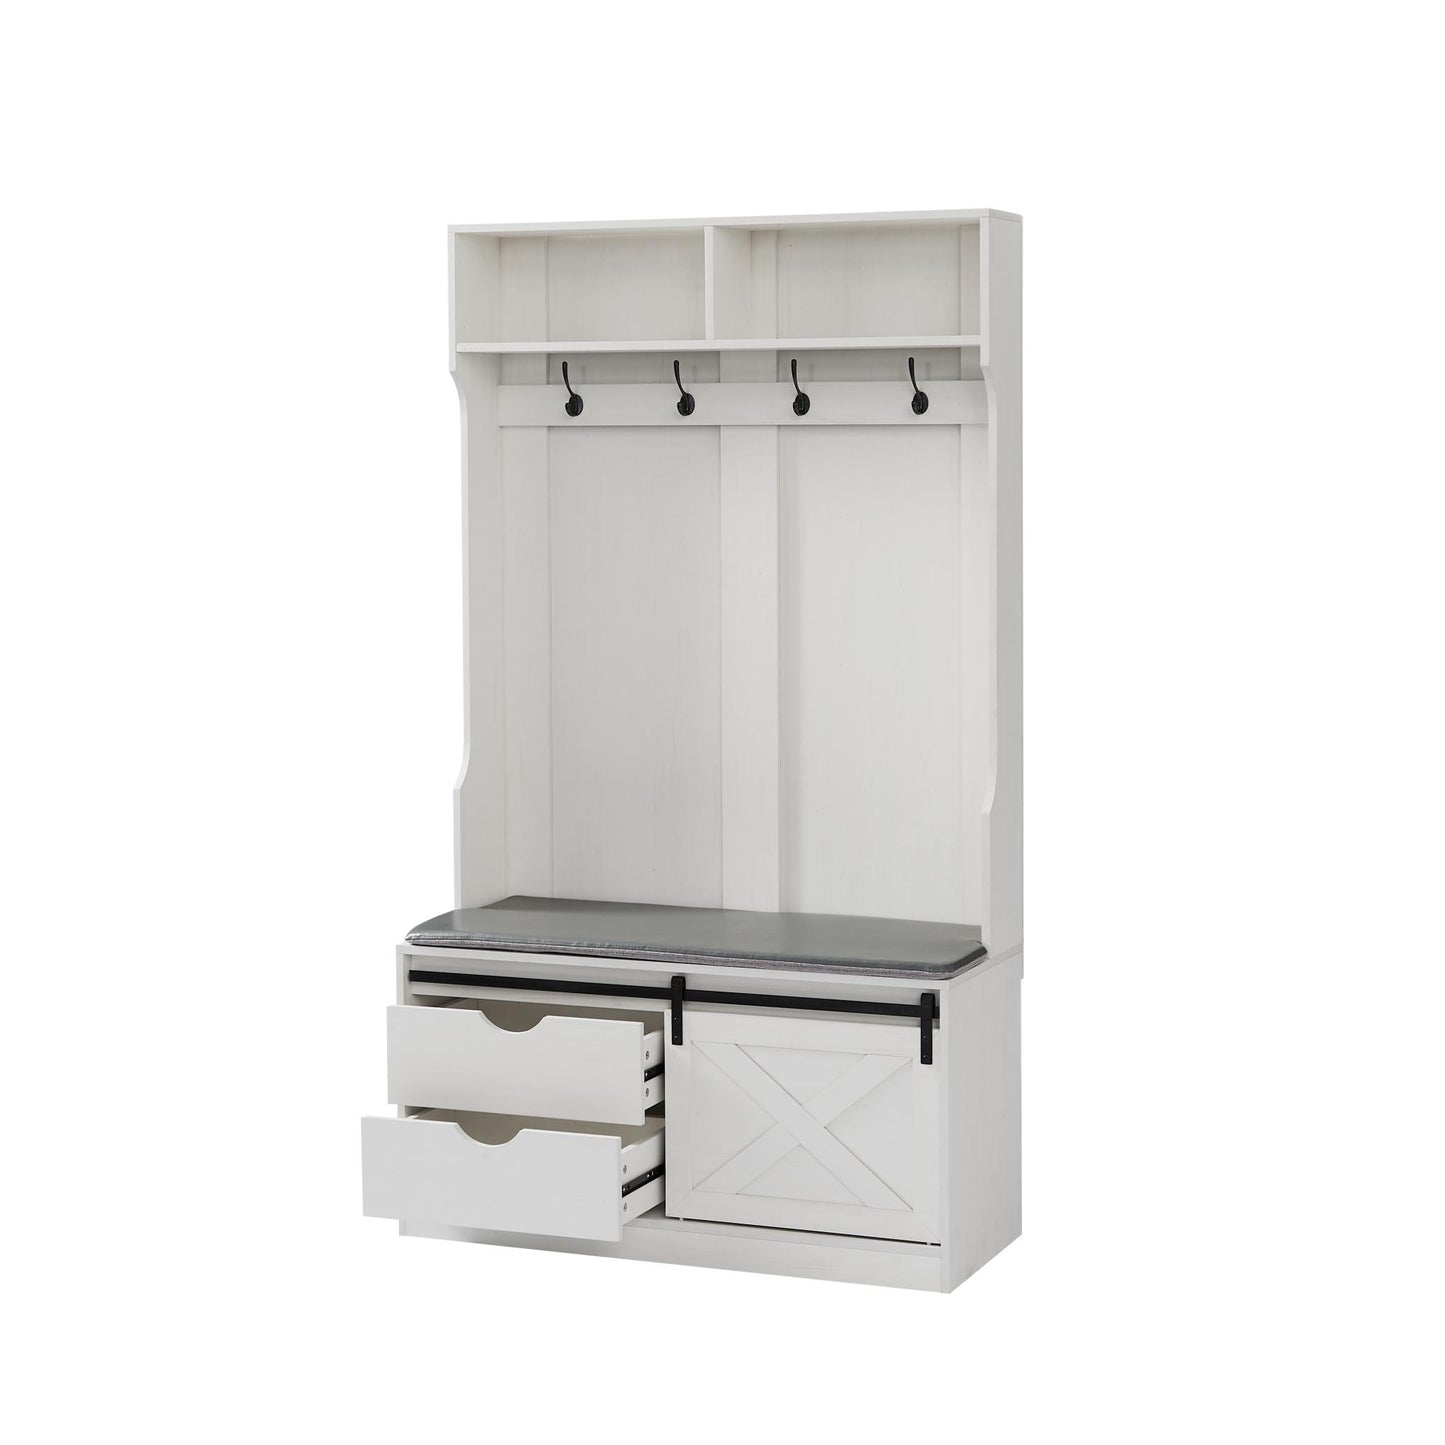 Coat Rack with Storage Shoe Cabinet - White